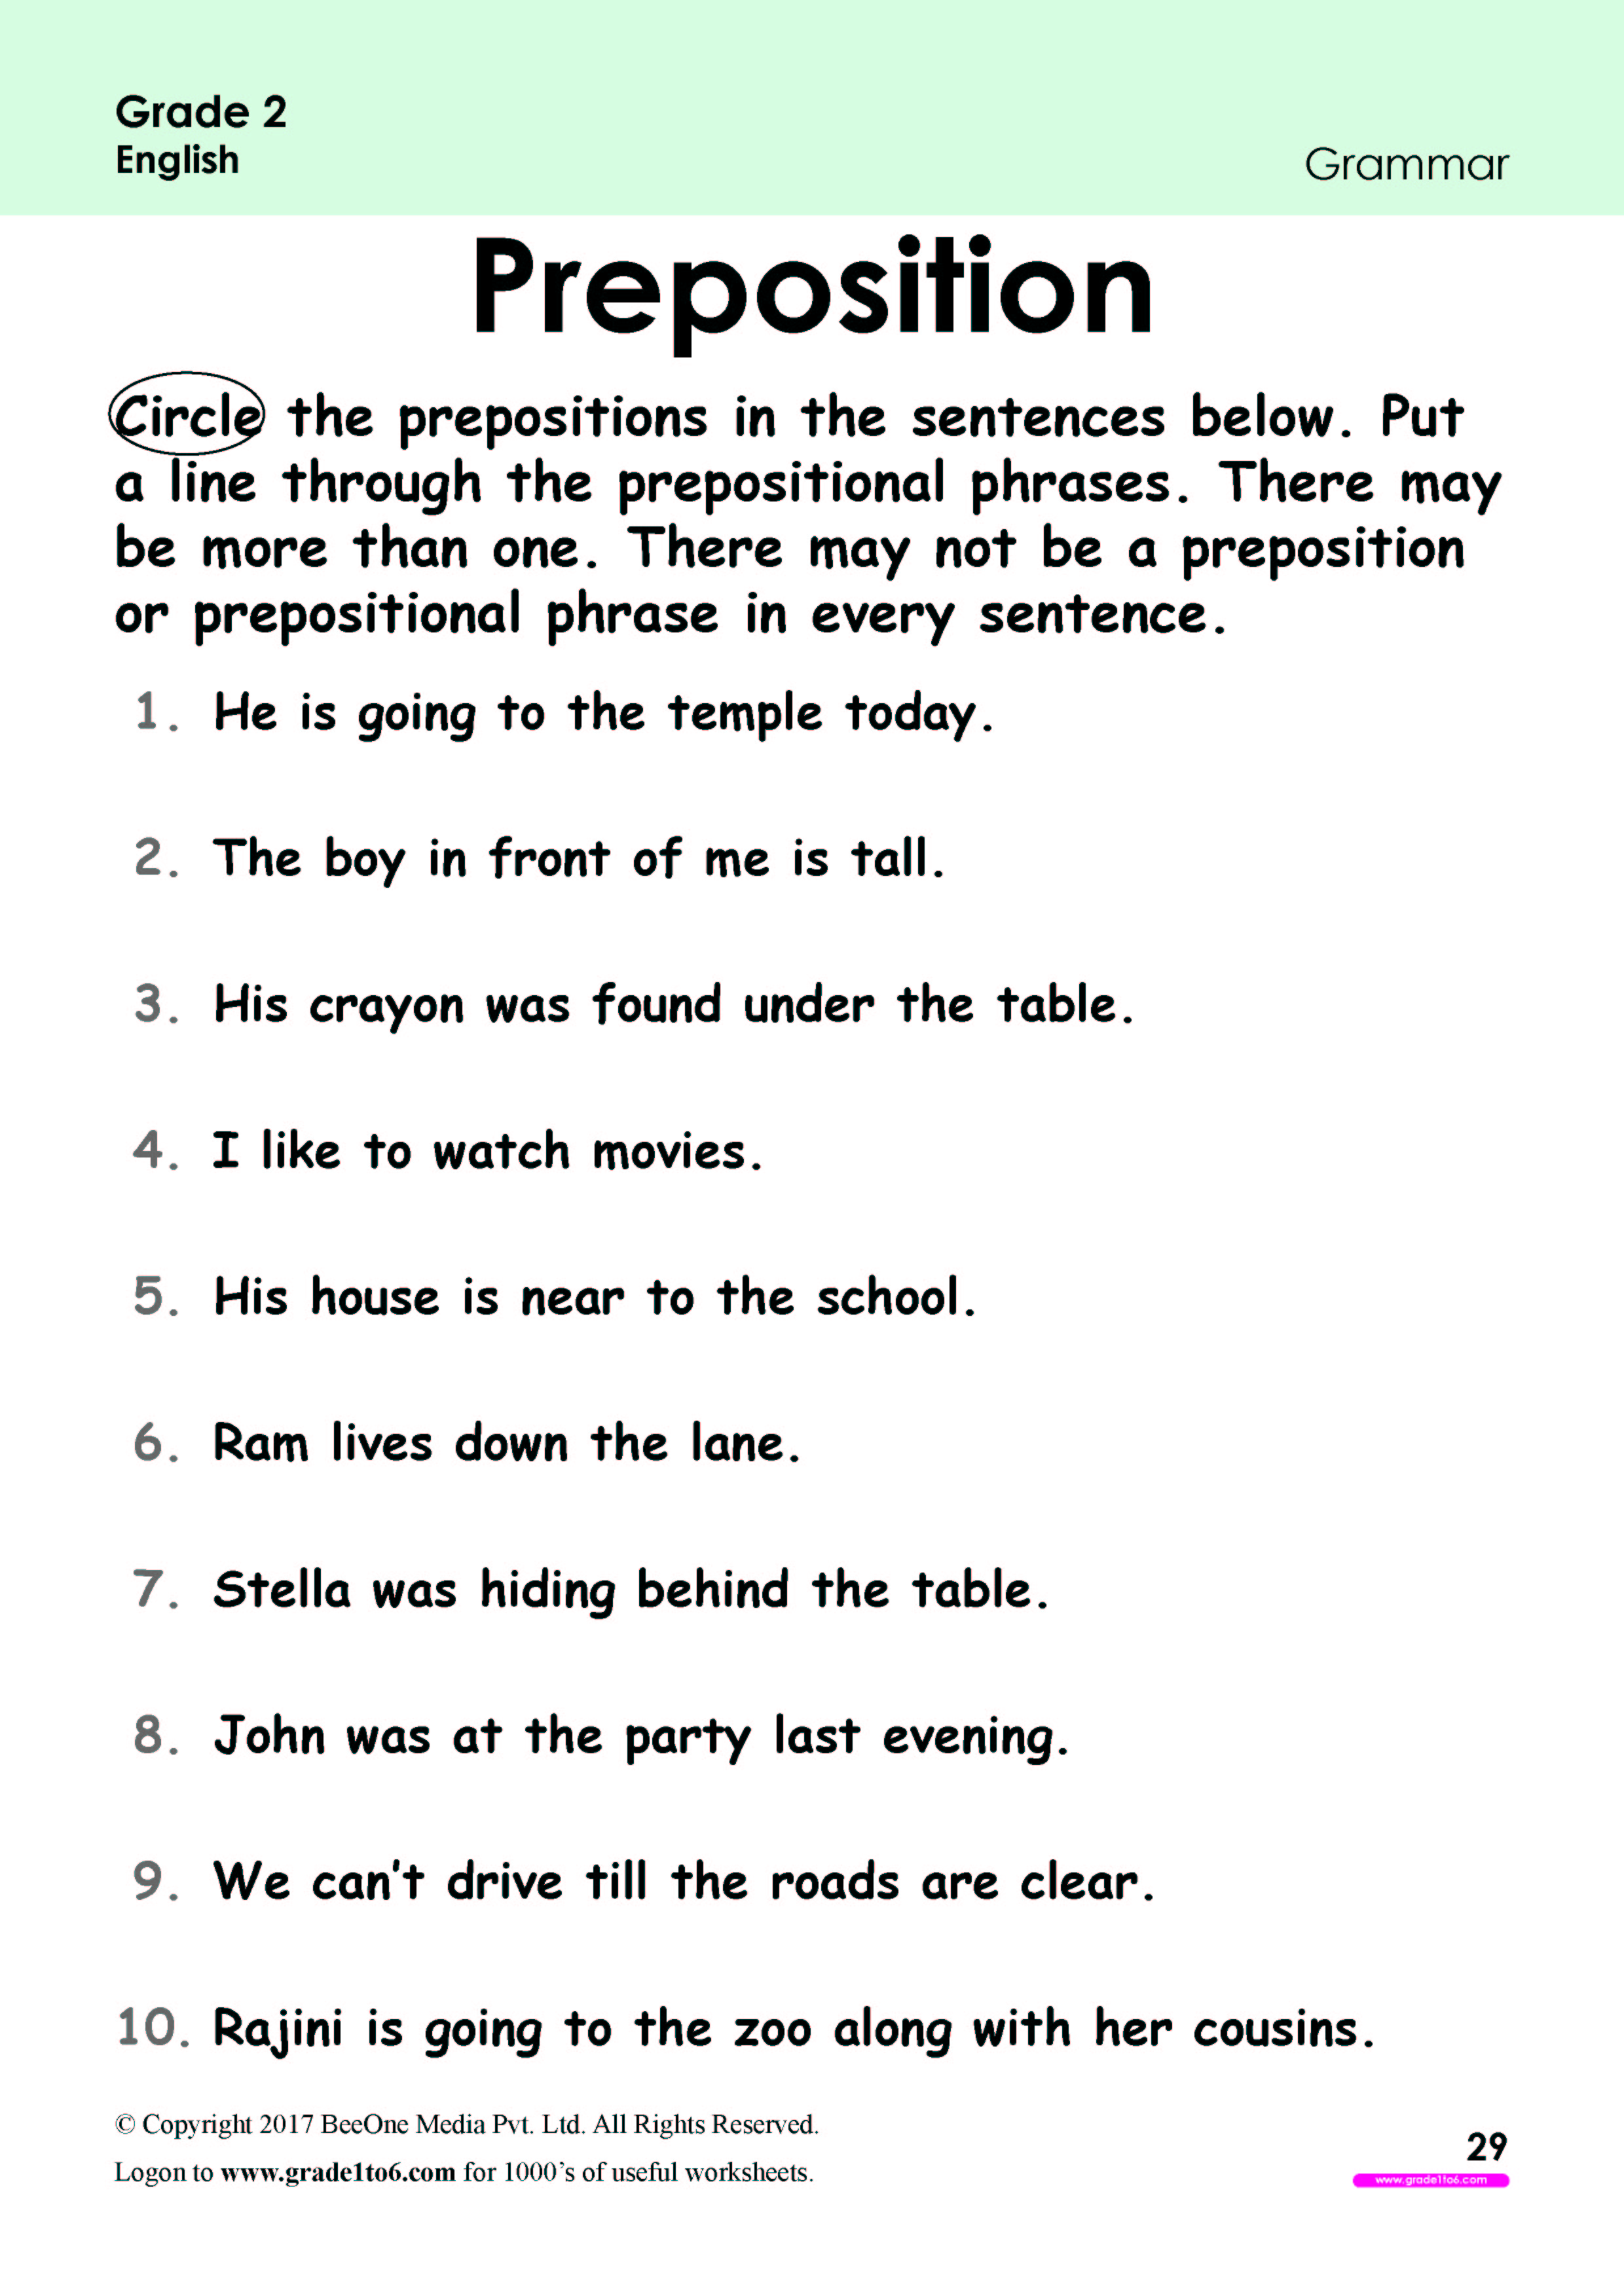 Preposition Sentences Worksheet Pdf